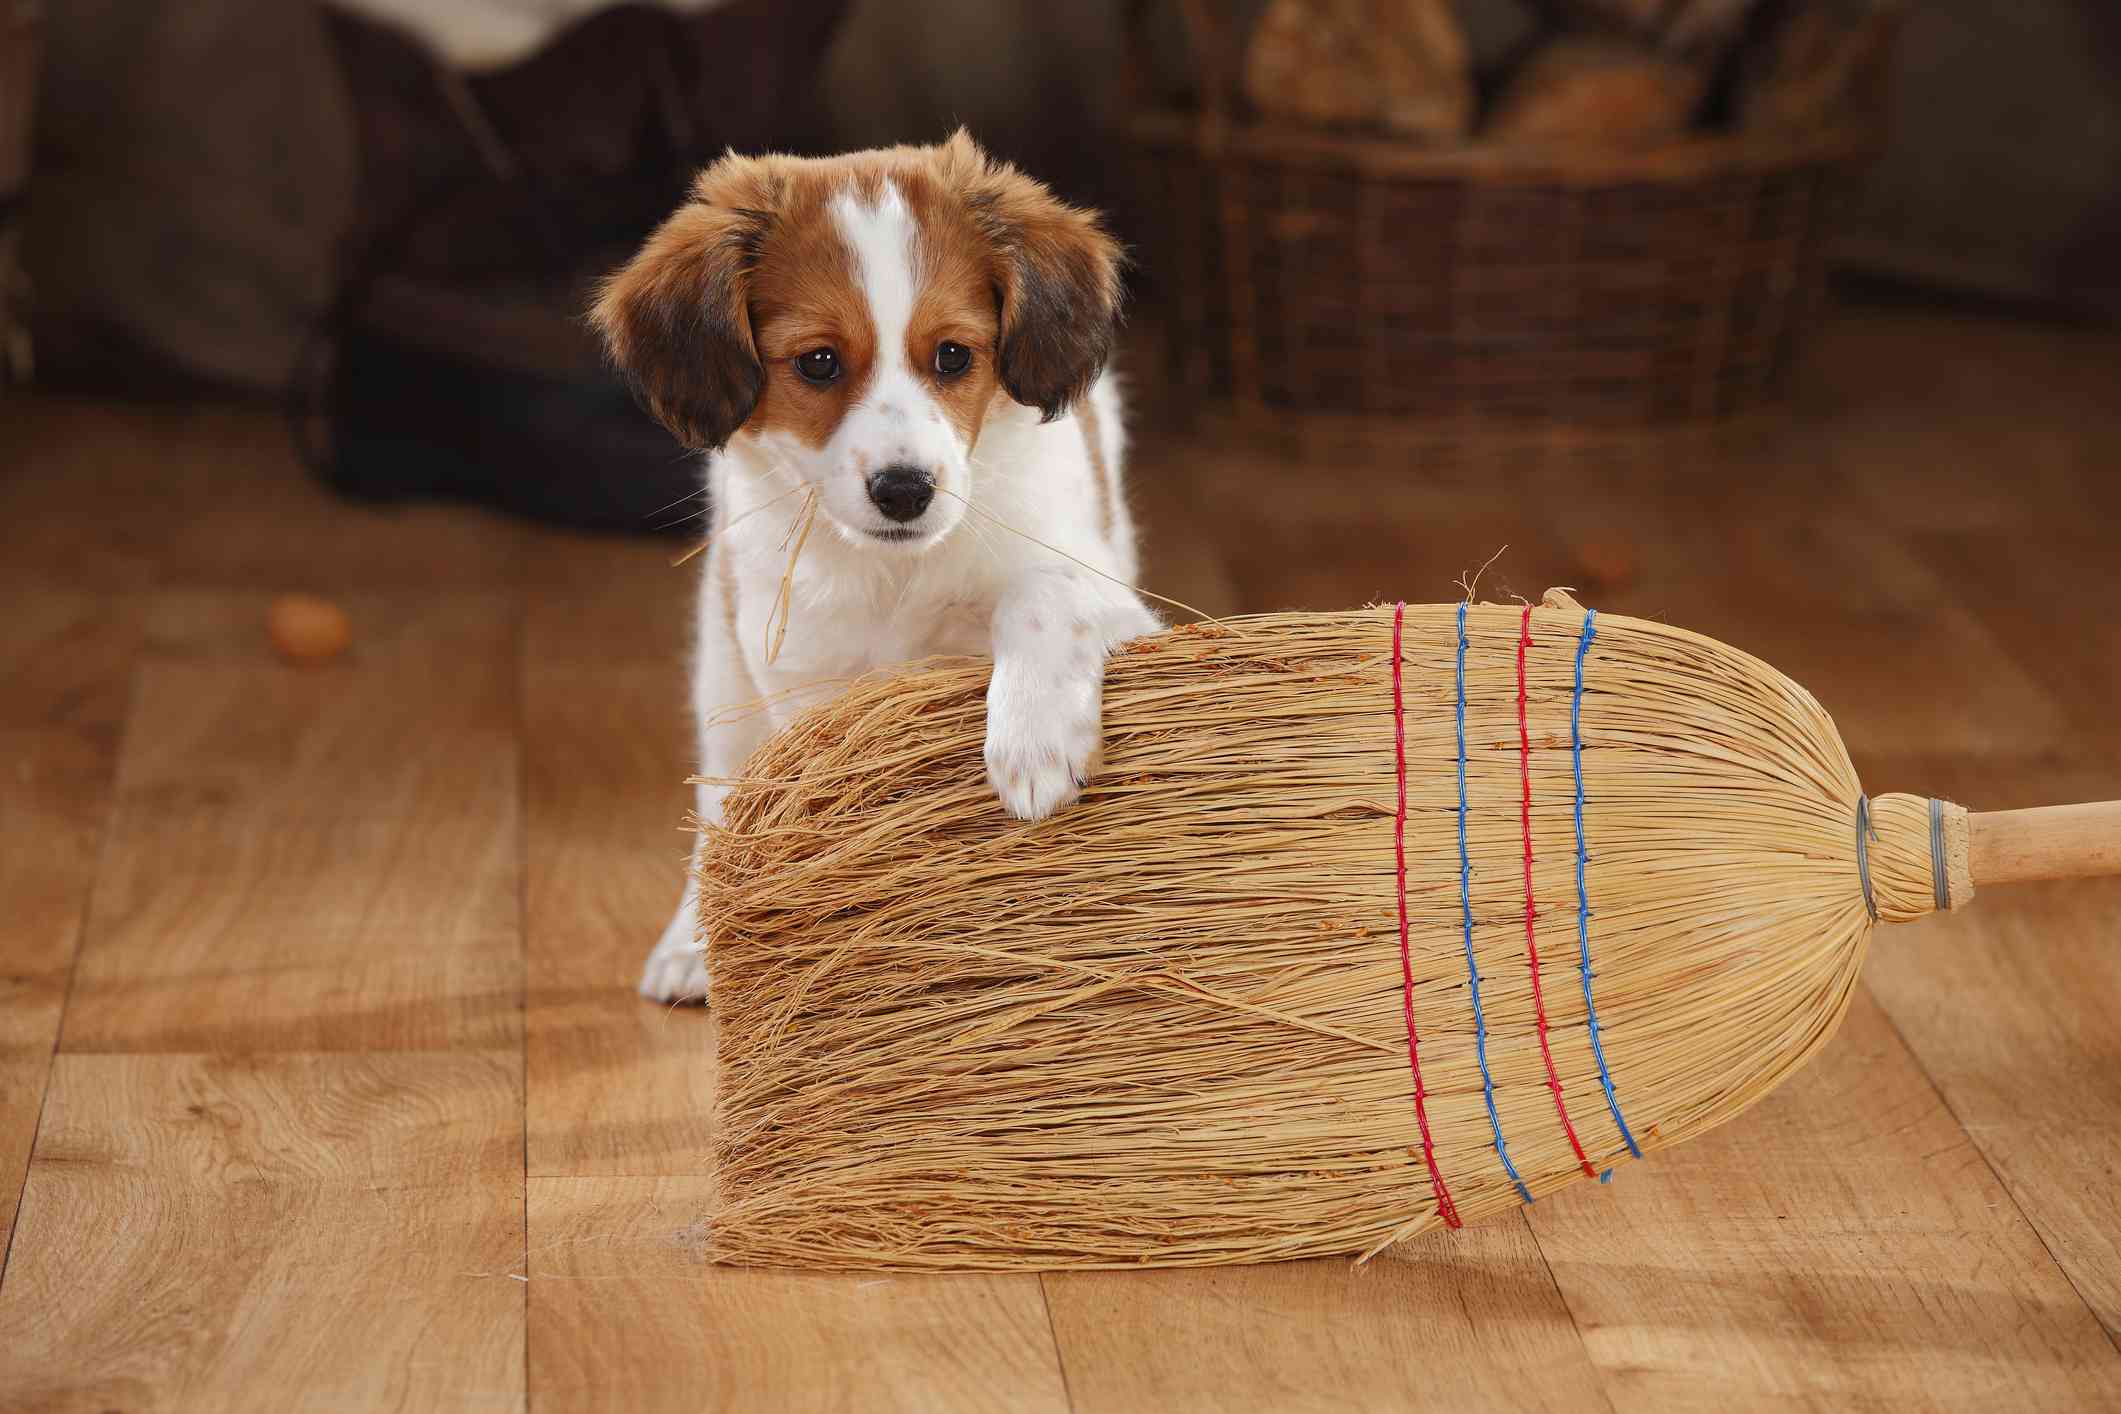 Kooikerhondje puppy playing with broom